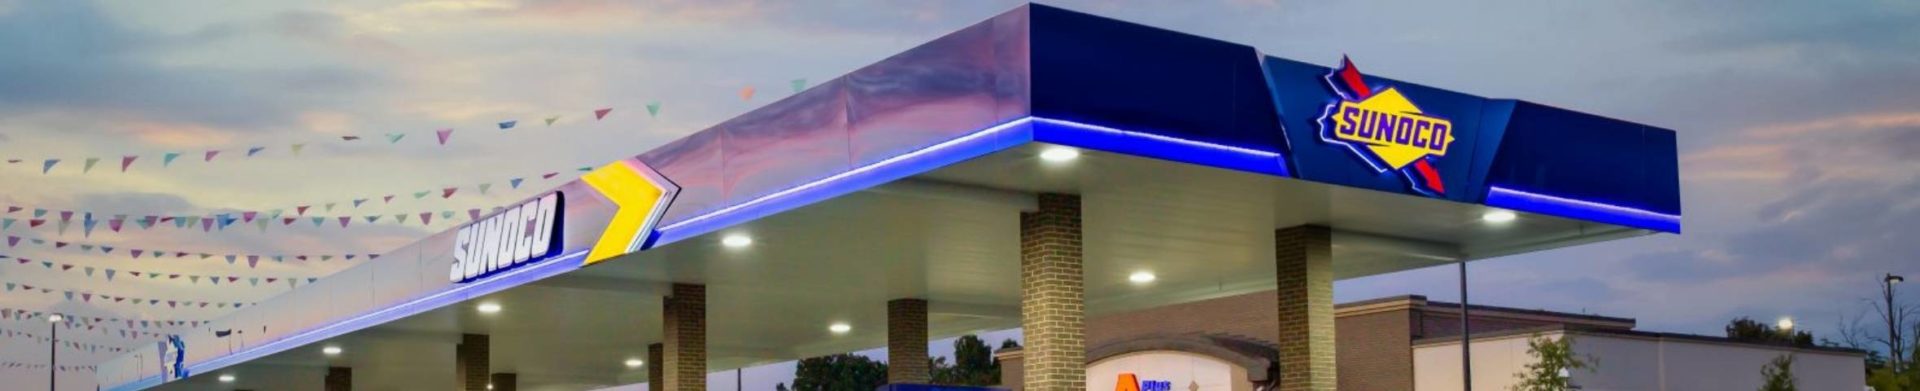 a Sunoco gas station